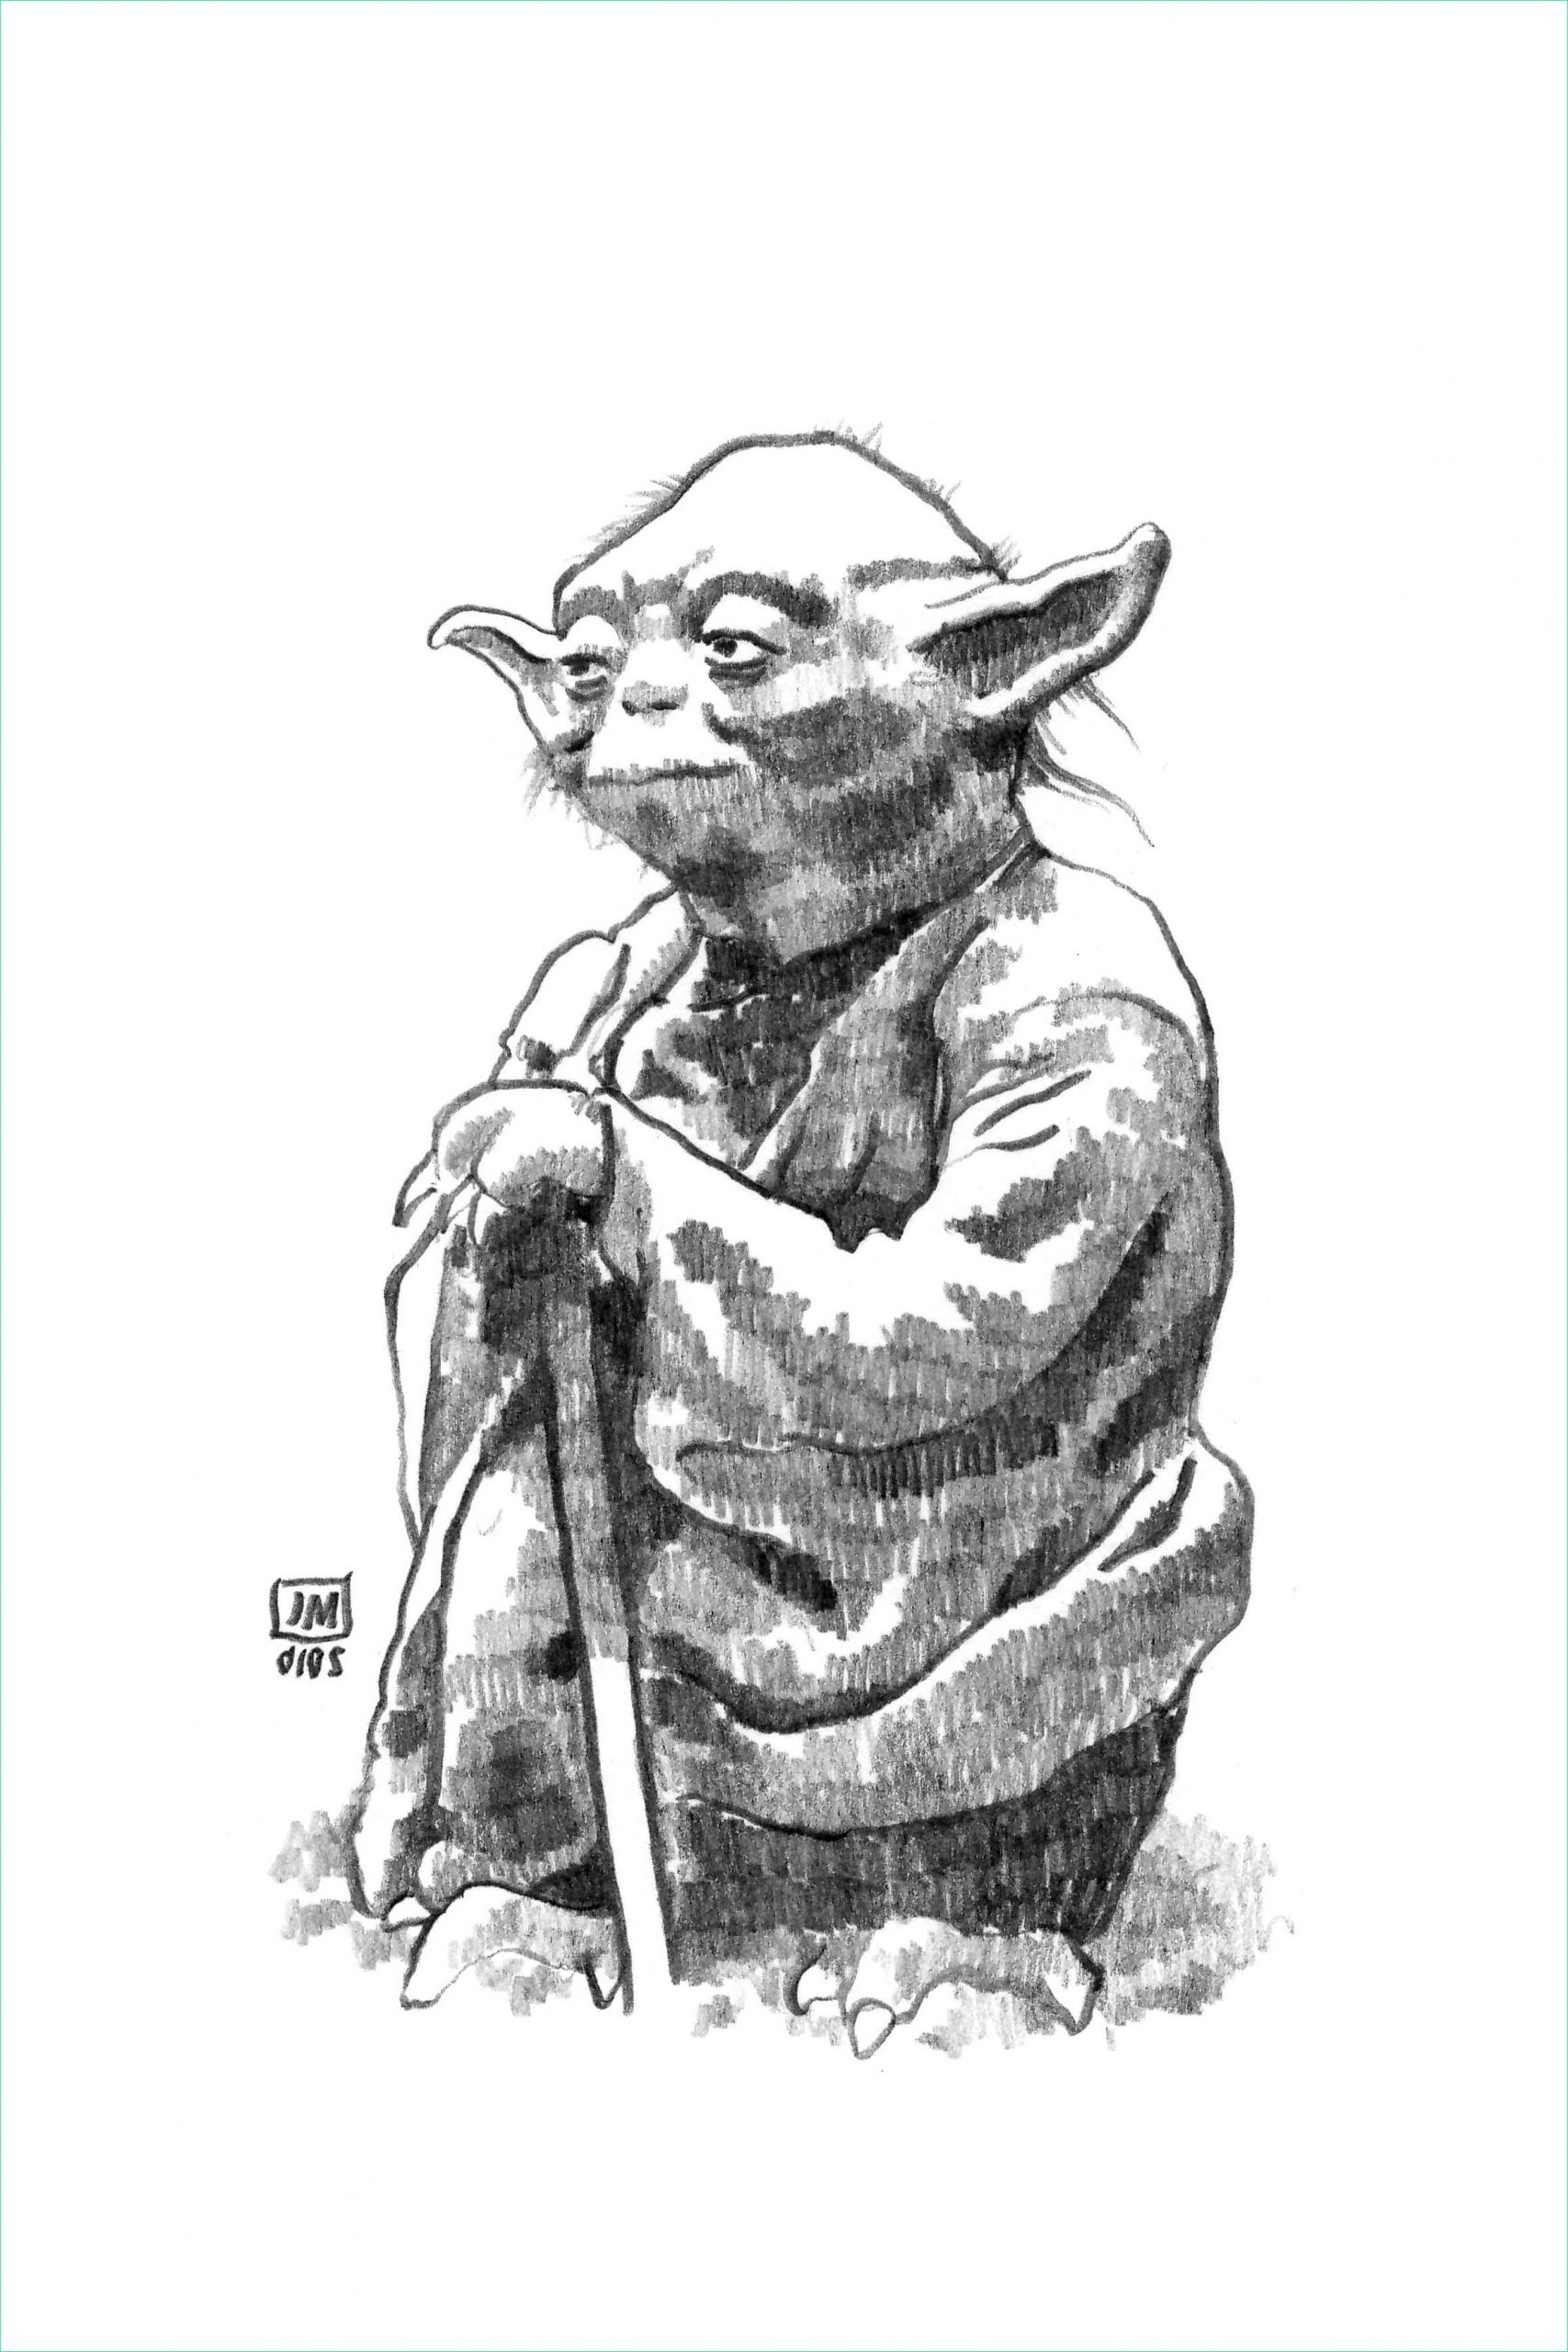 Dessin Maitre Yoda Inspirant Image Yoda Le MaÎtre Jedi 2016 Crayon Sur Papier